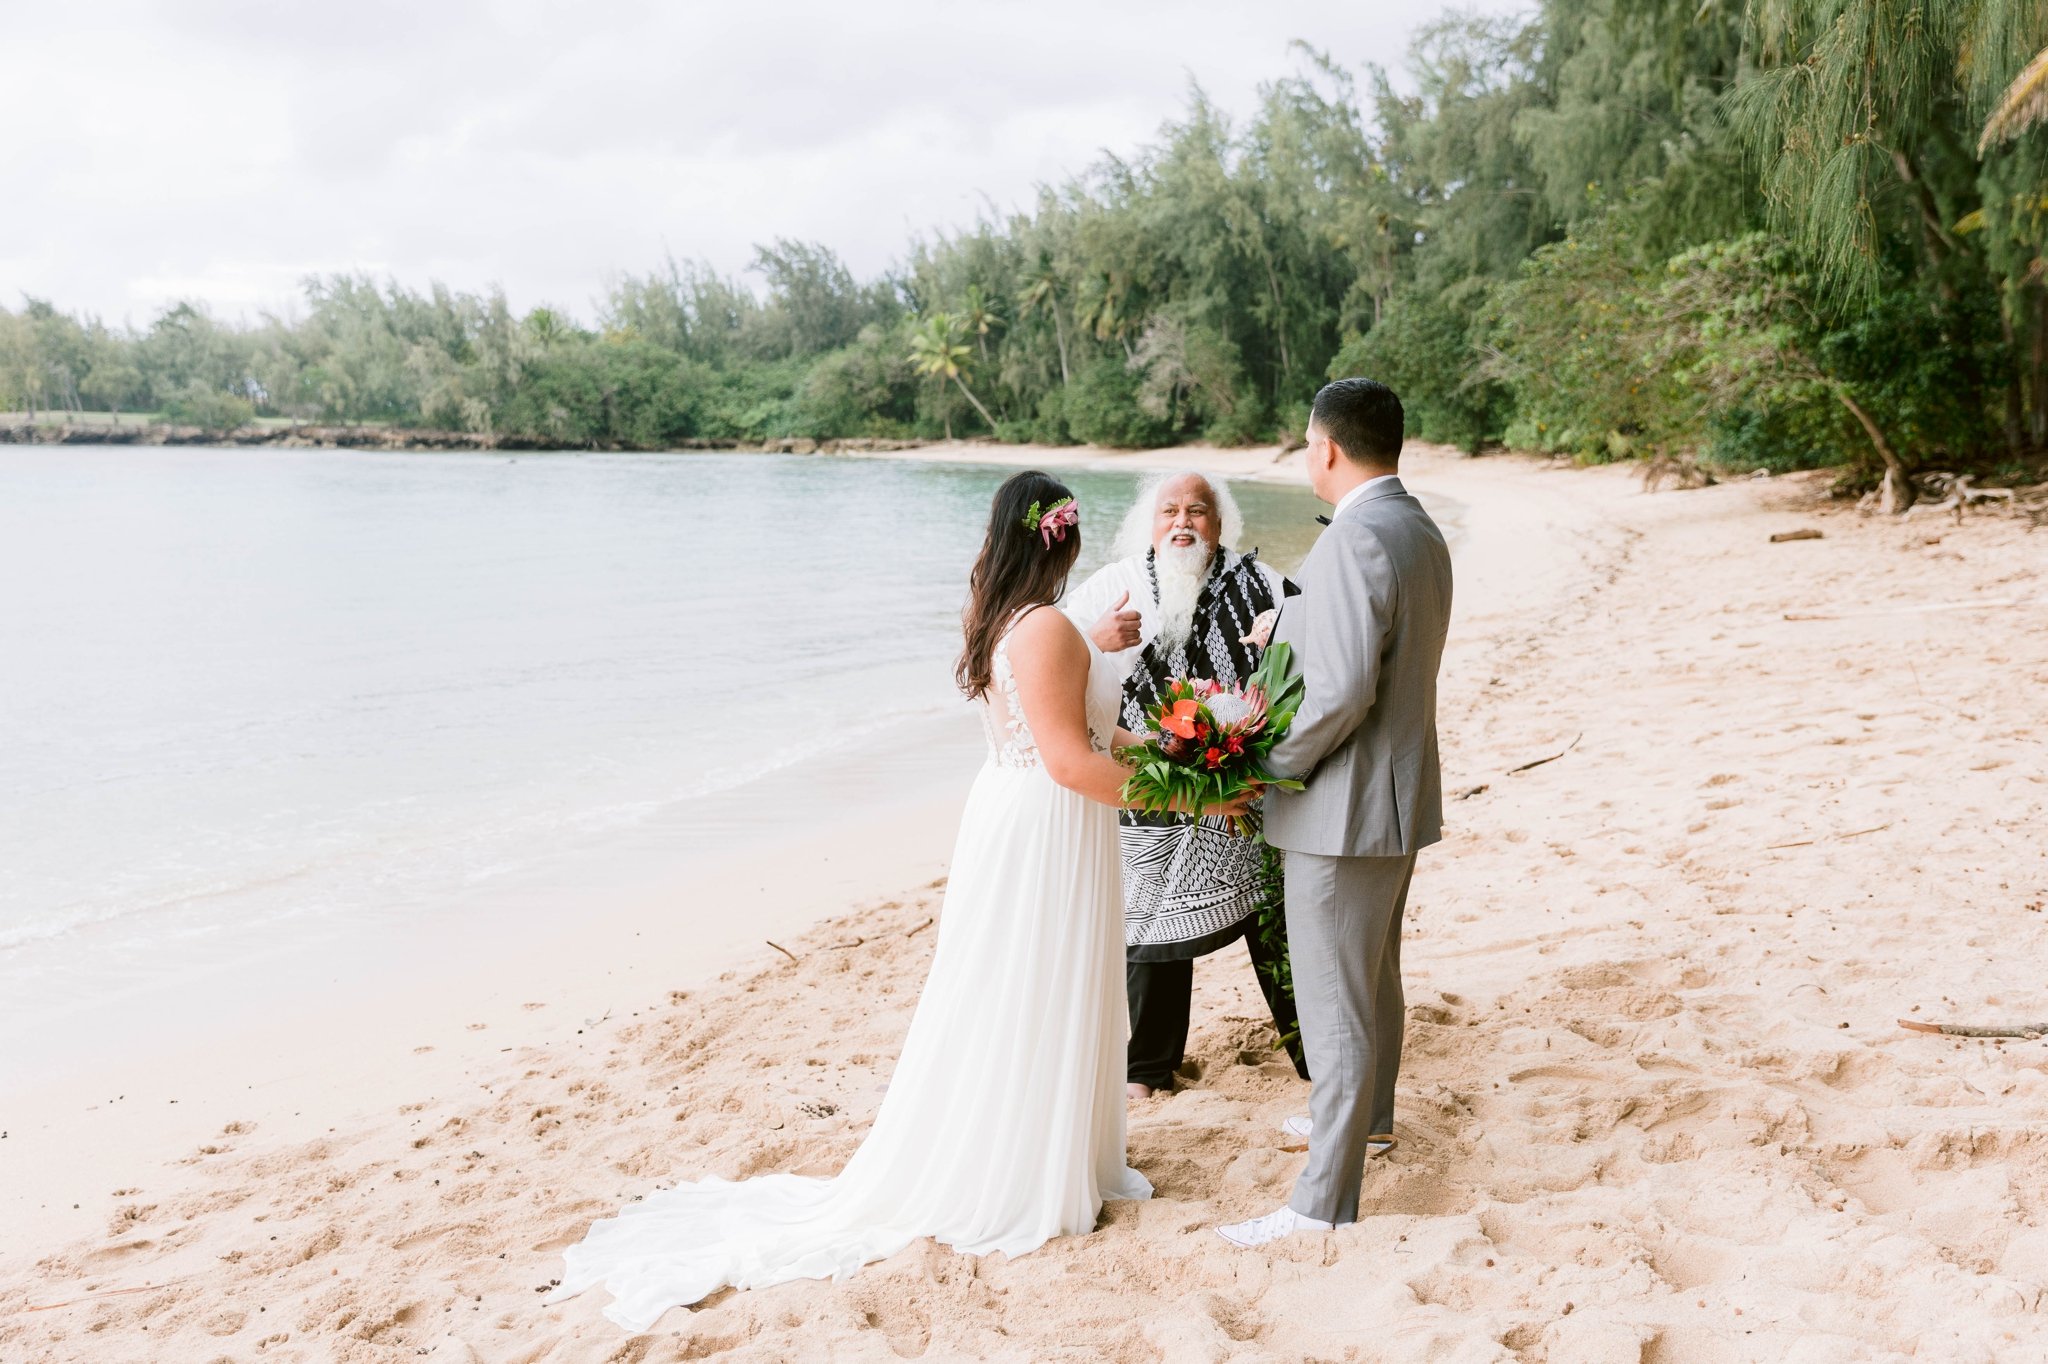 Elopement at Kawela Beach Park - Oahu Hawaii Wedding Photographer